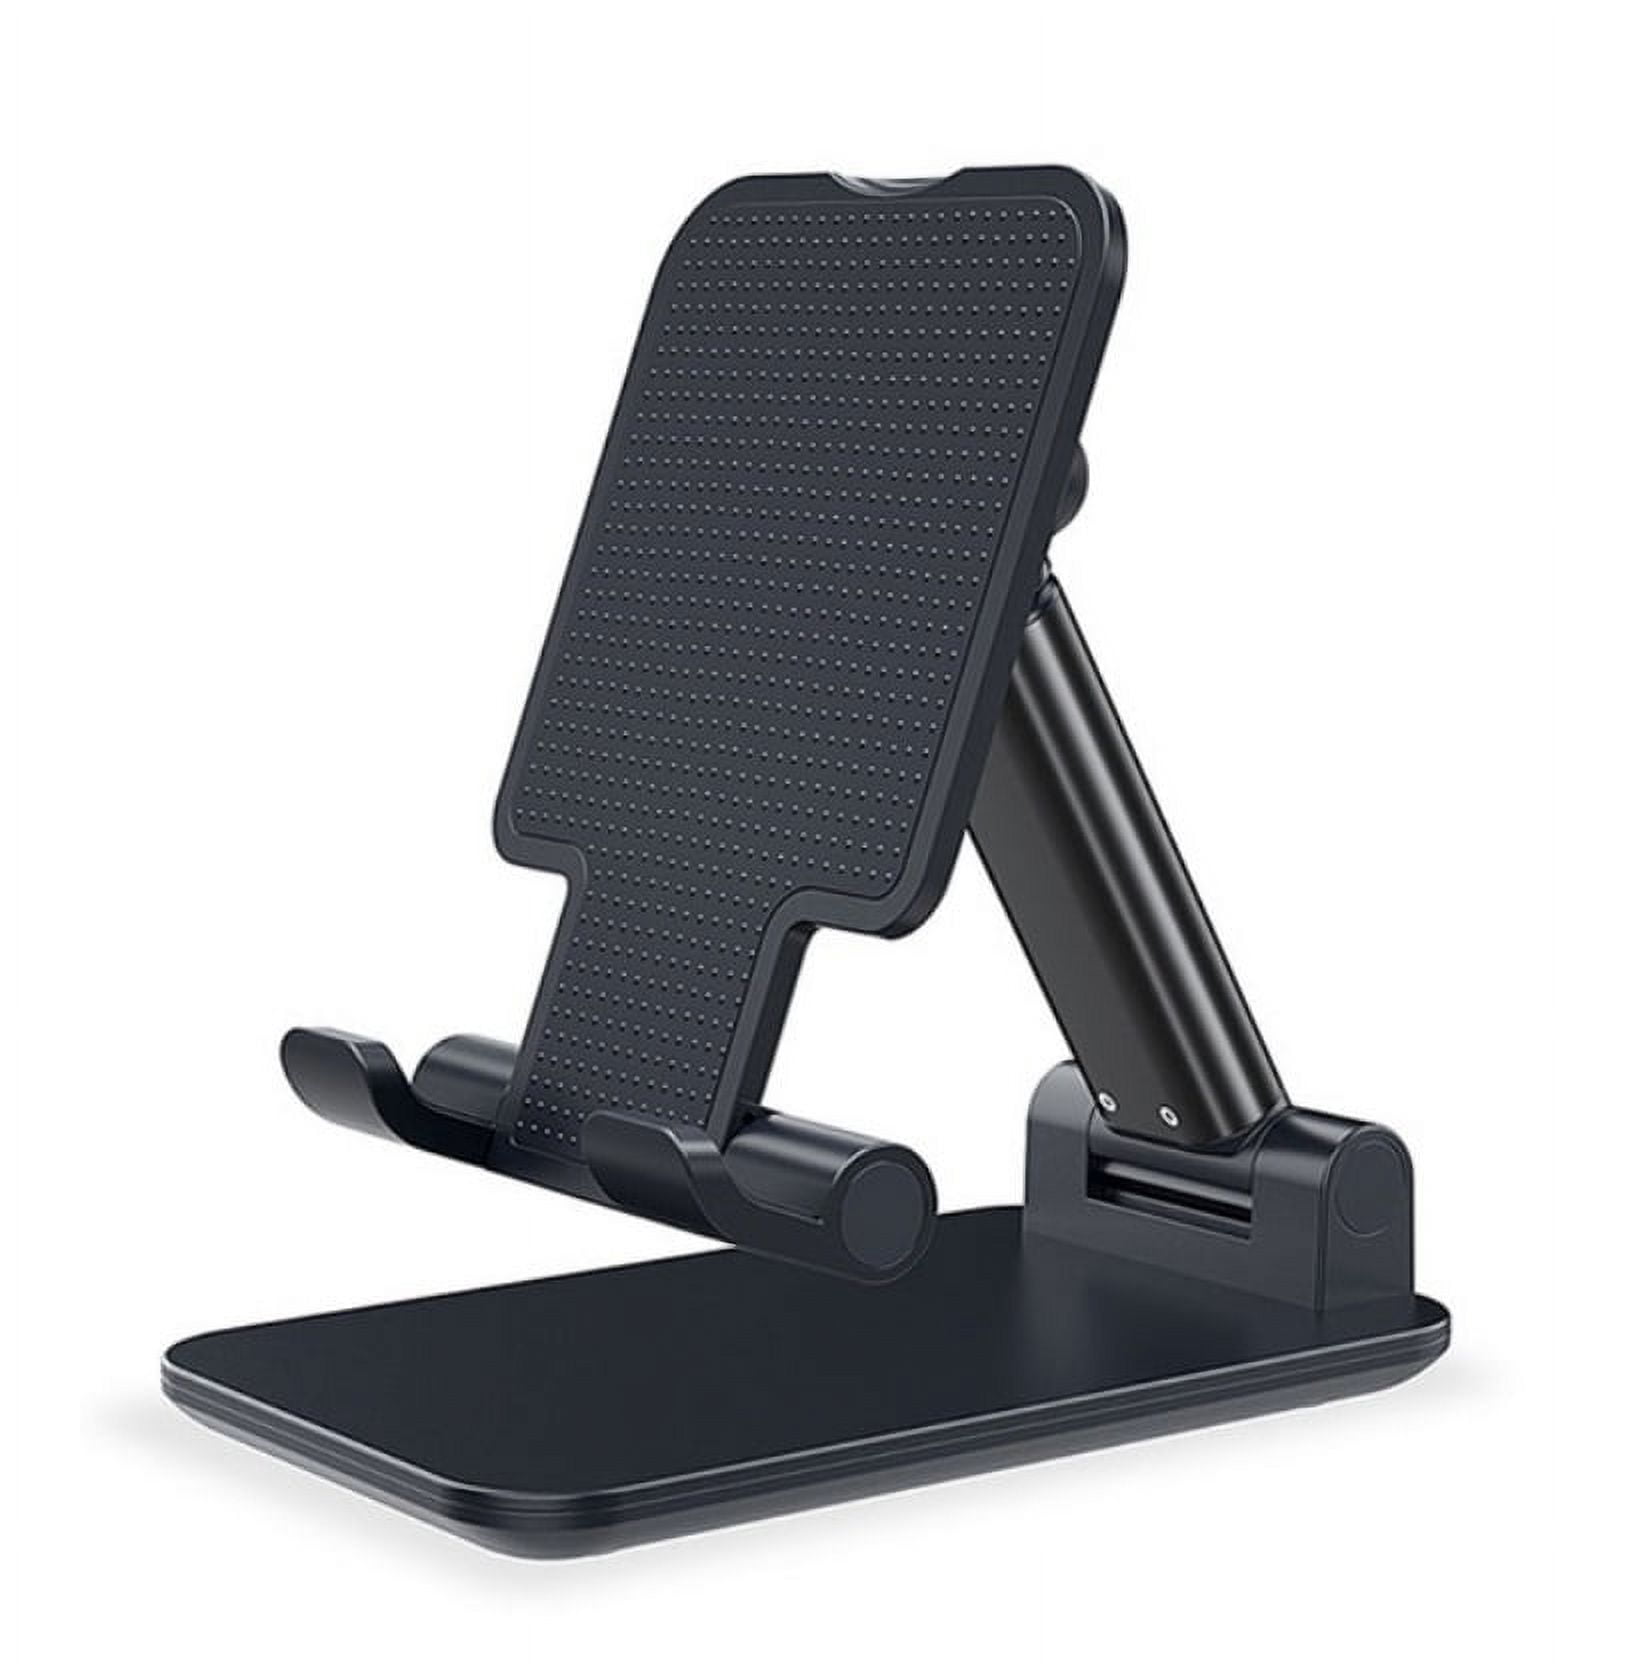 Foldable Mobile Phone Desk Table Desktop Stand Holder For Cell Phone Tablet